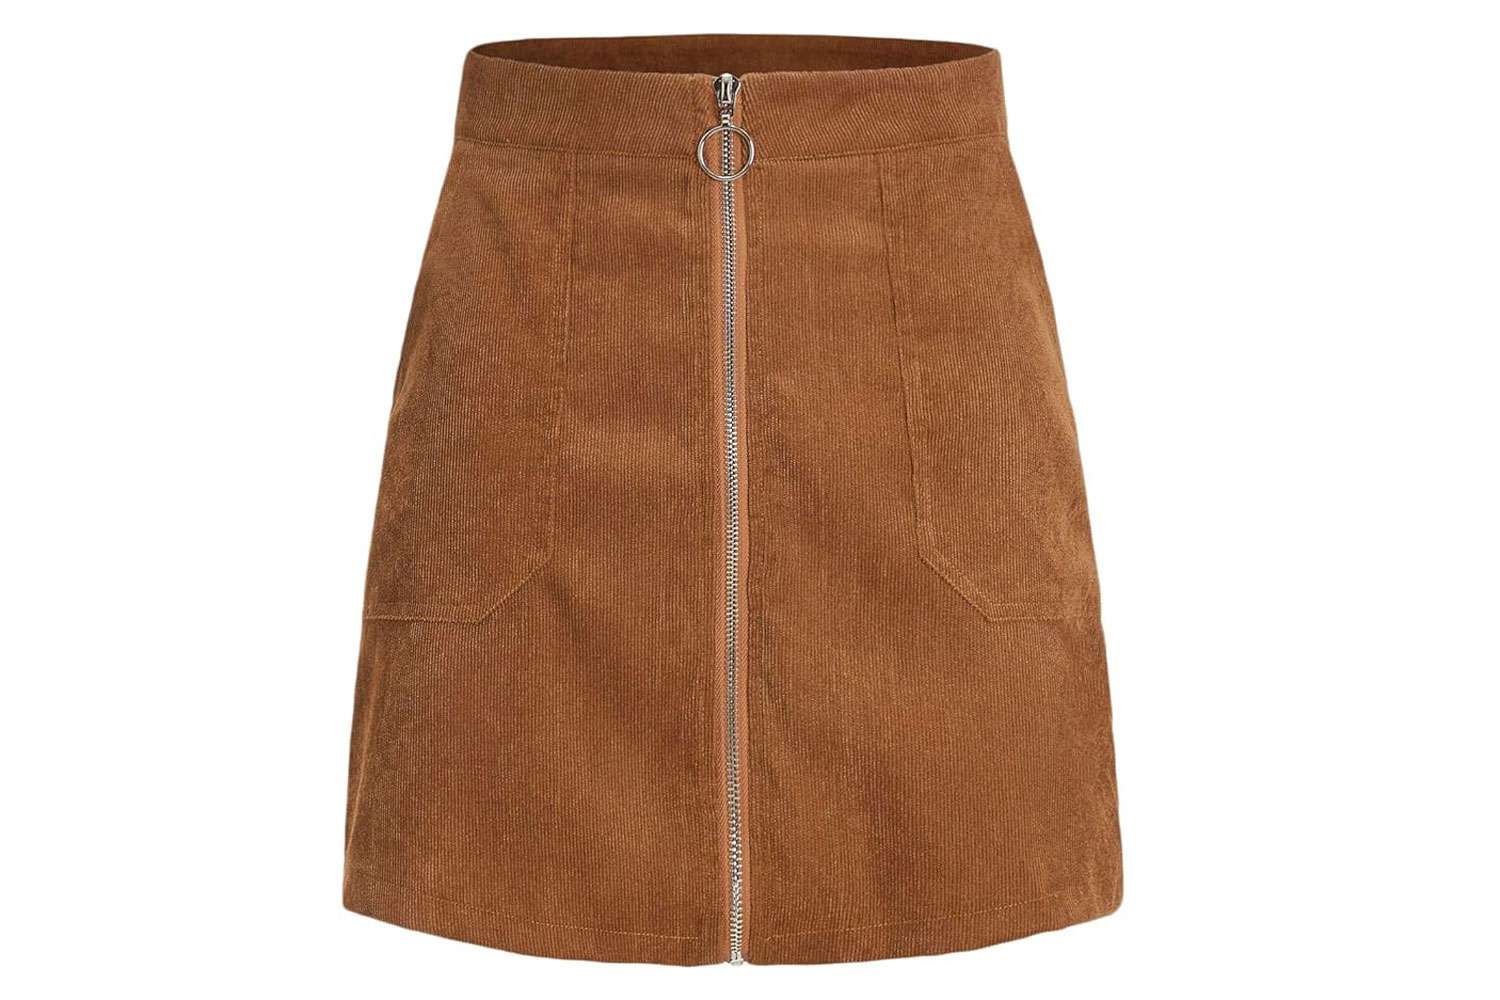 Amazon MakeMeChic Women's Zipper Front Corduroy Skirt Mini Pencil Skirt